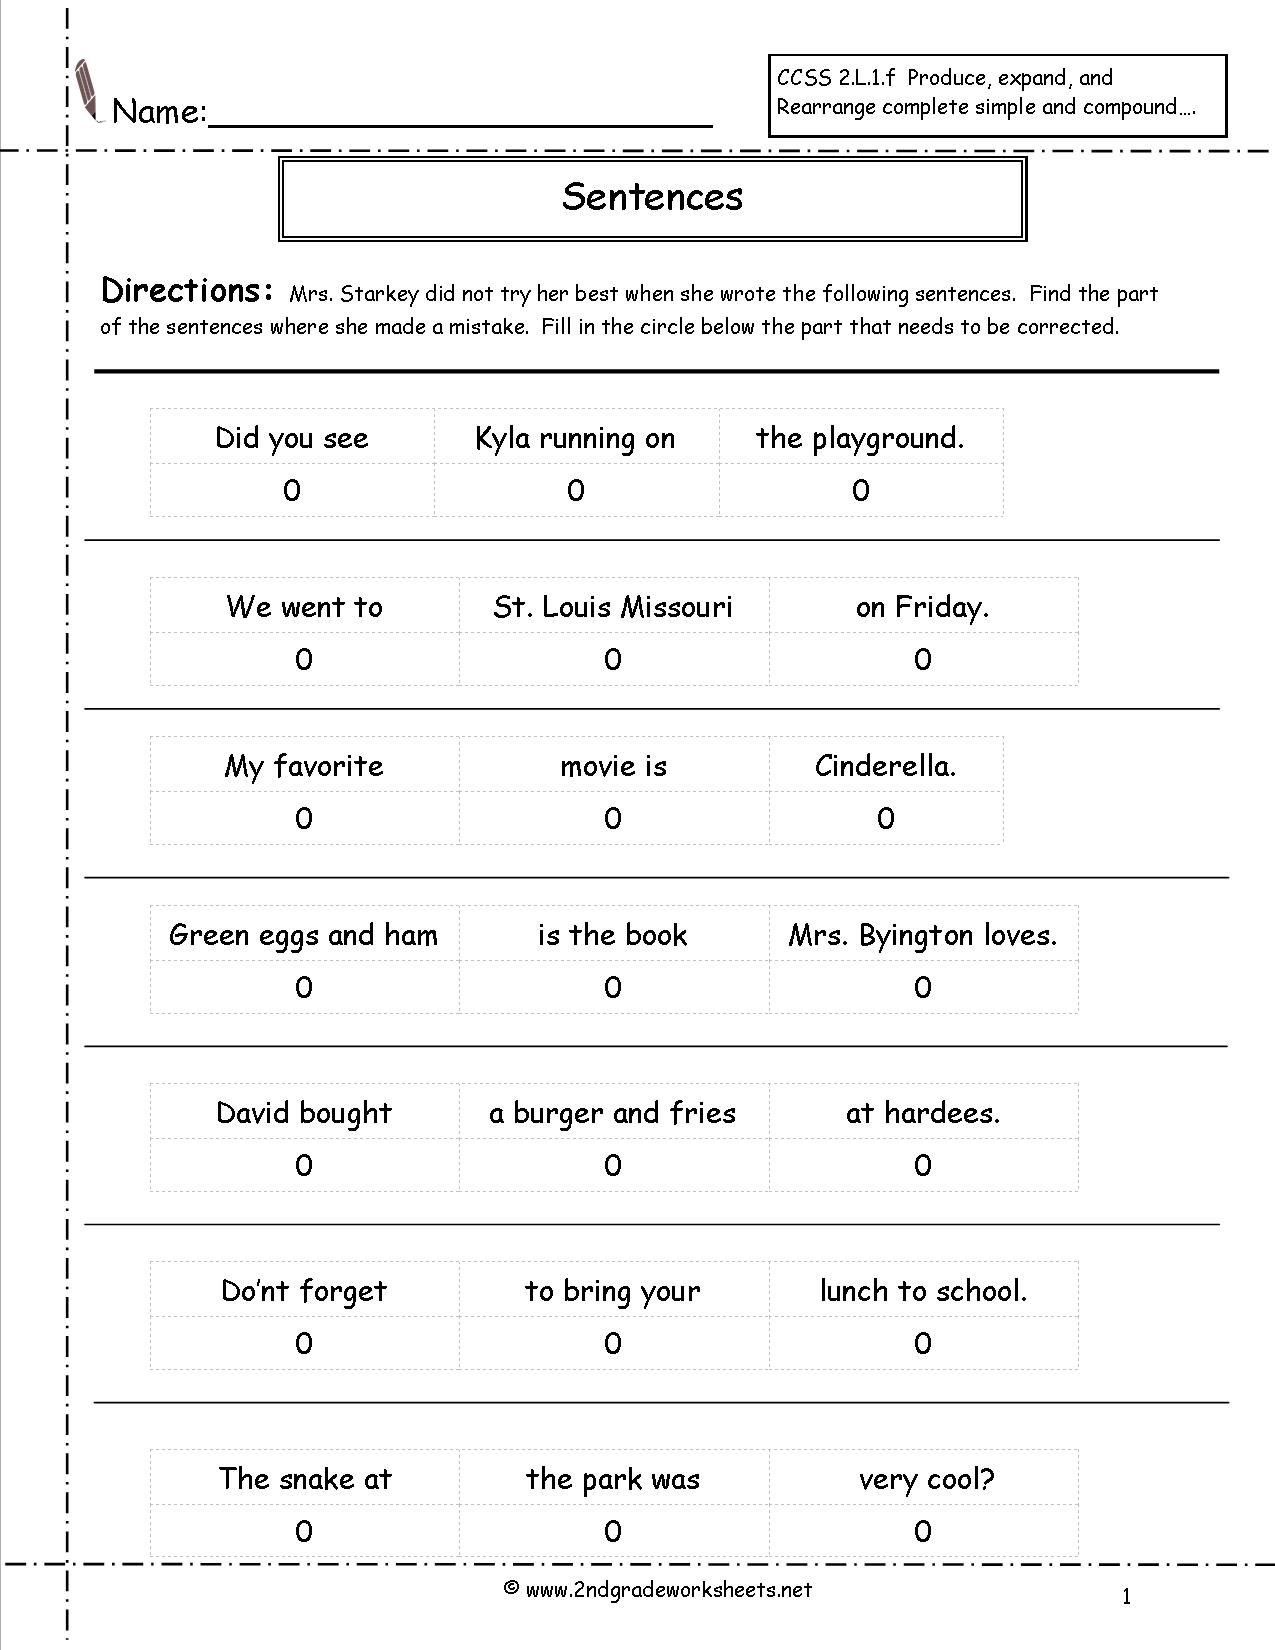 Sentence Correction Worksheets For 2nd Grade